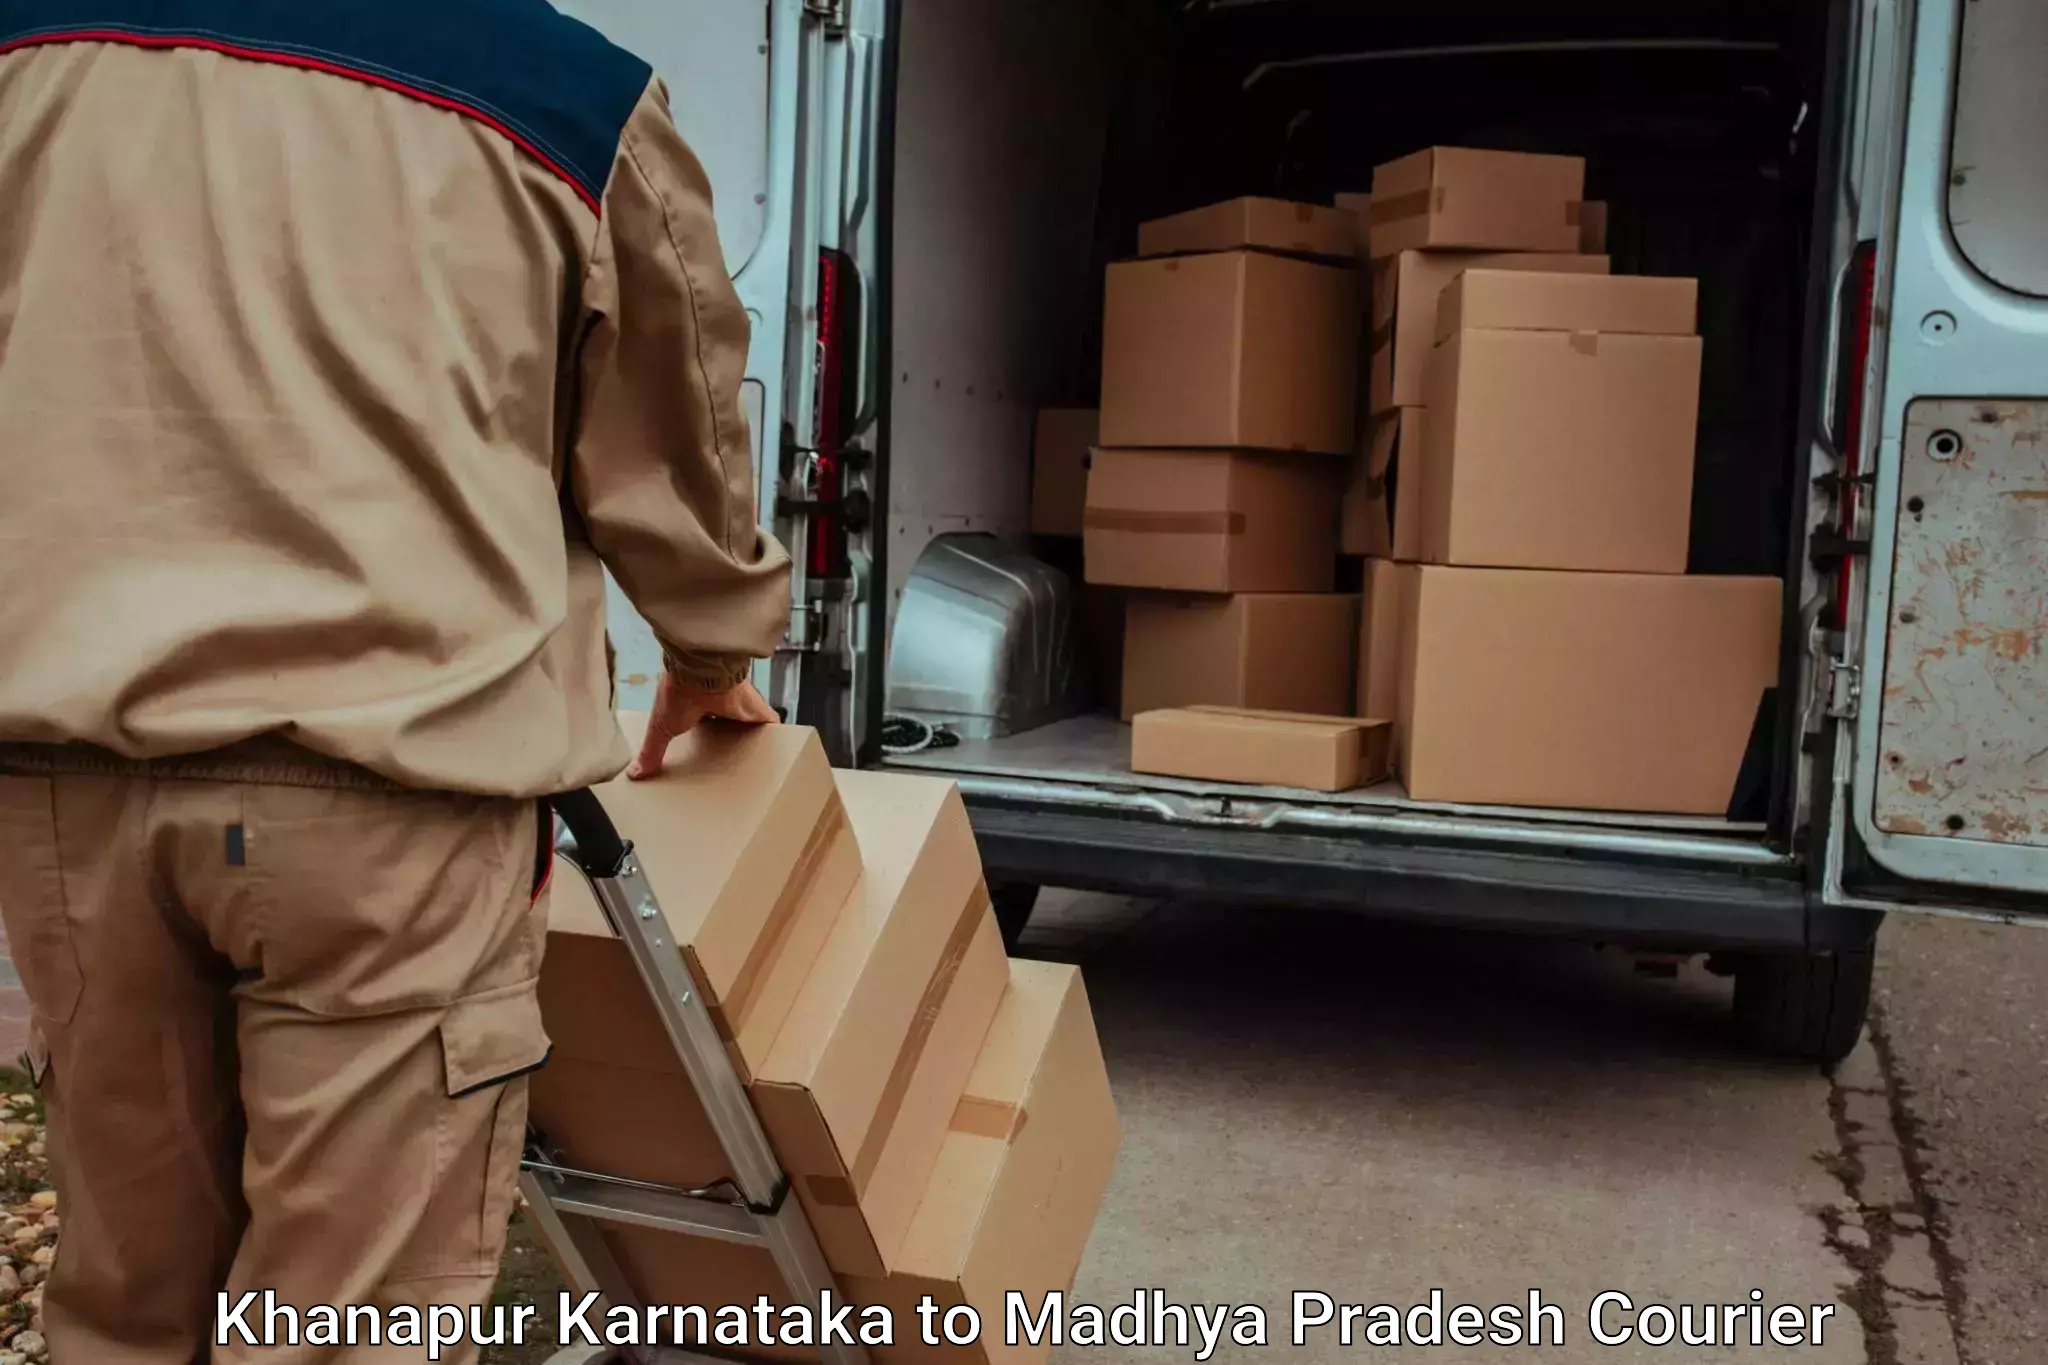 Luggage transport service Khanapur Karnataka to Madhya Pradesh